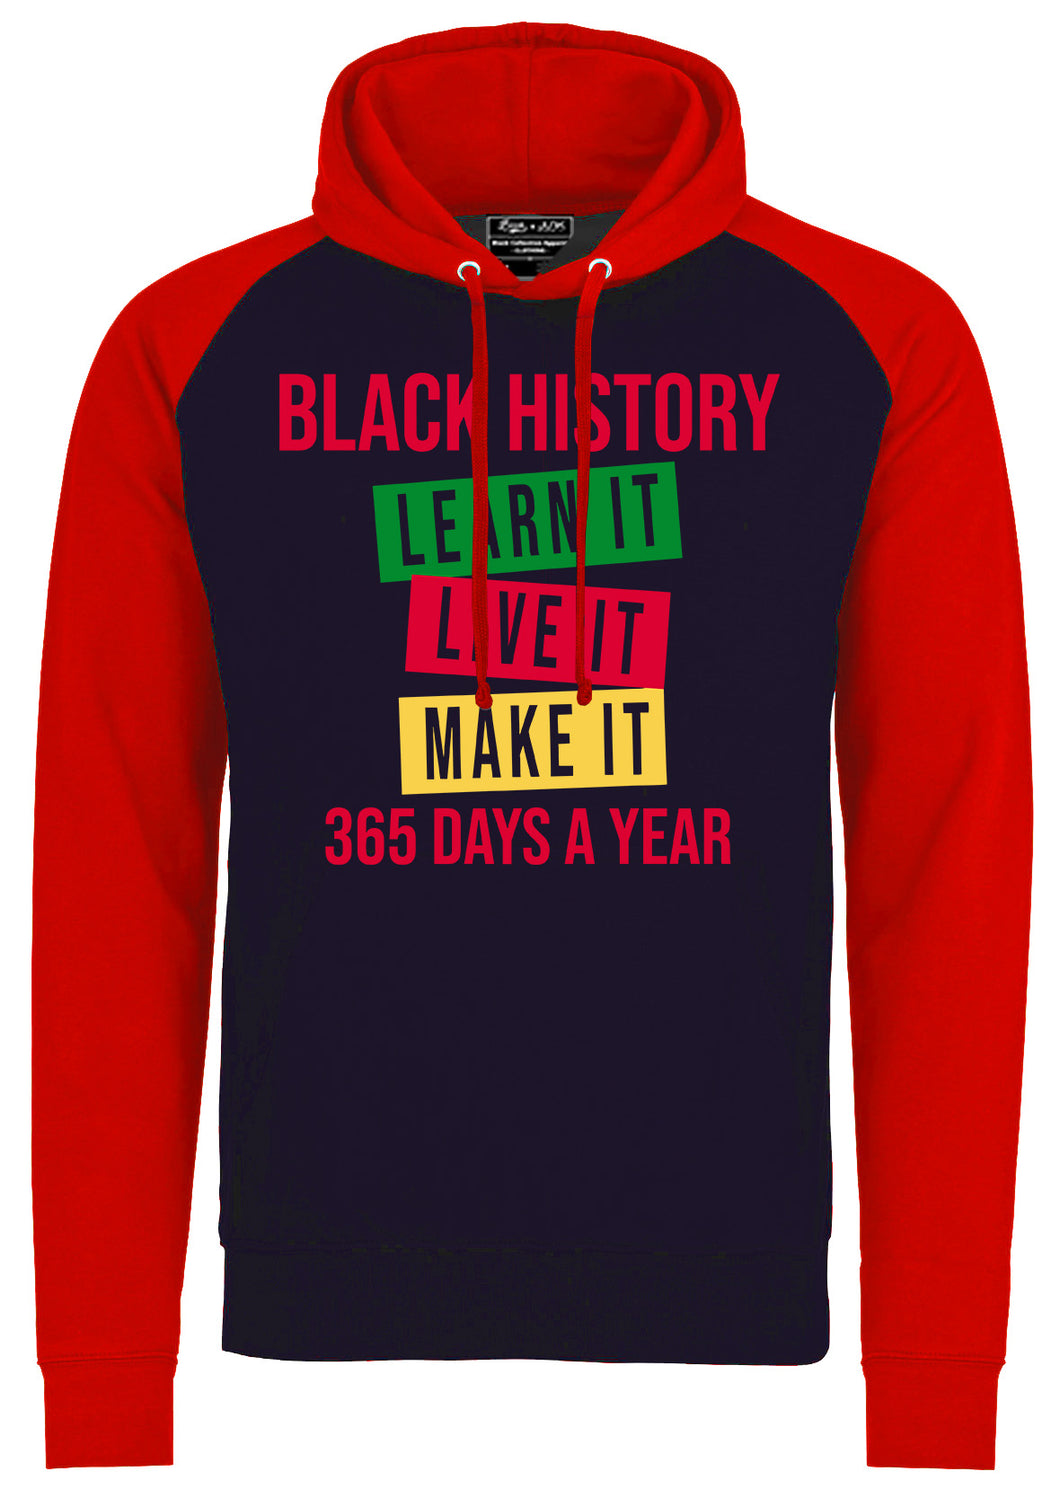 BLACK HISTORY LEARN IT, LIVE IT, MAKE IT 365 DAYS Tshirts